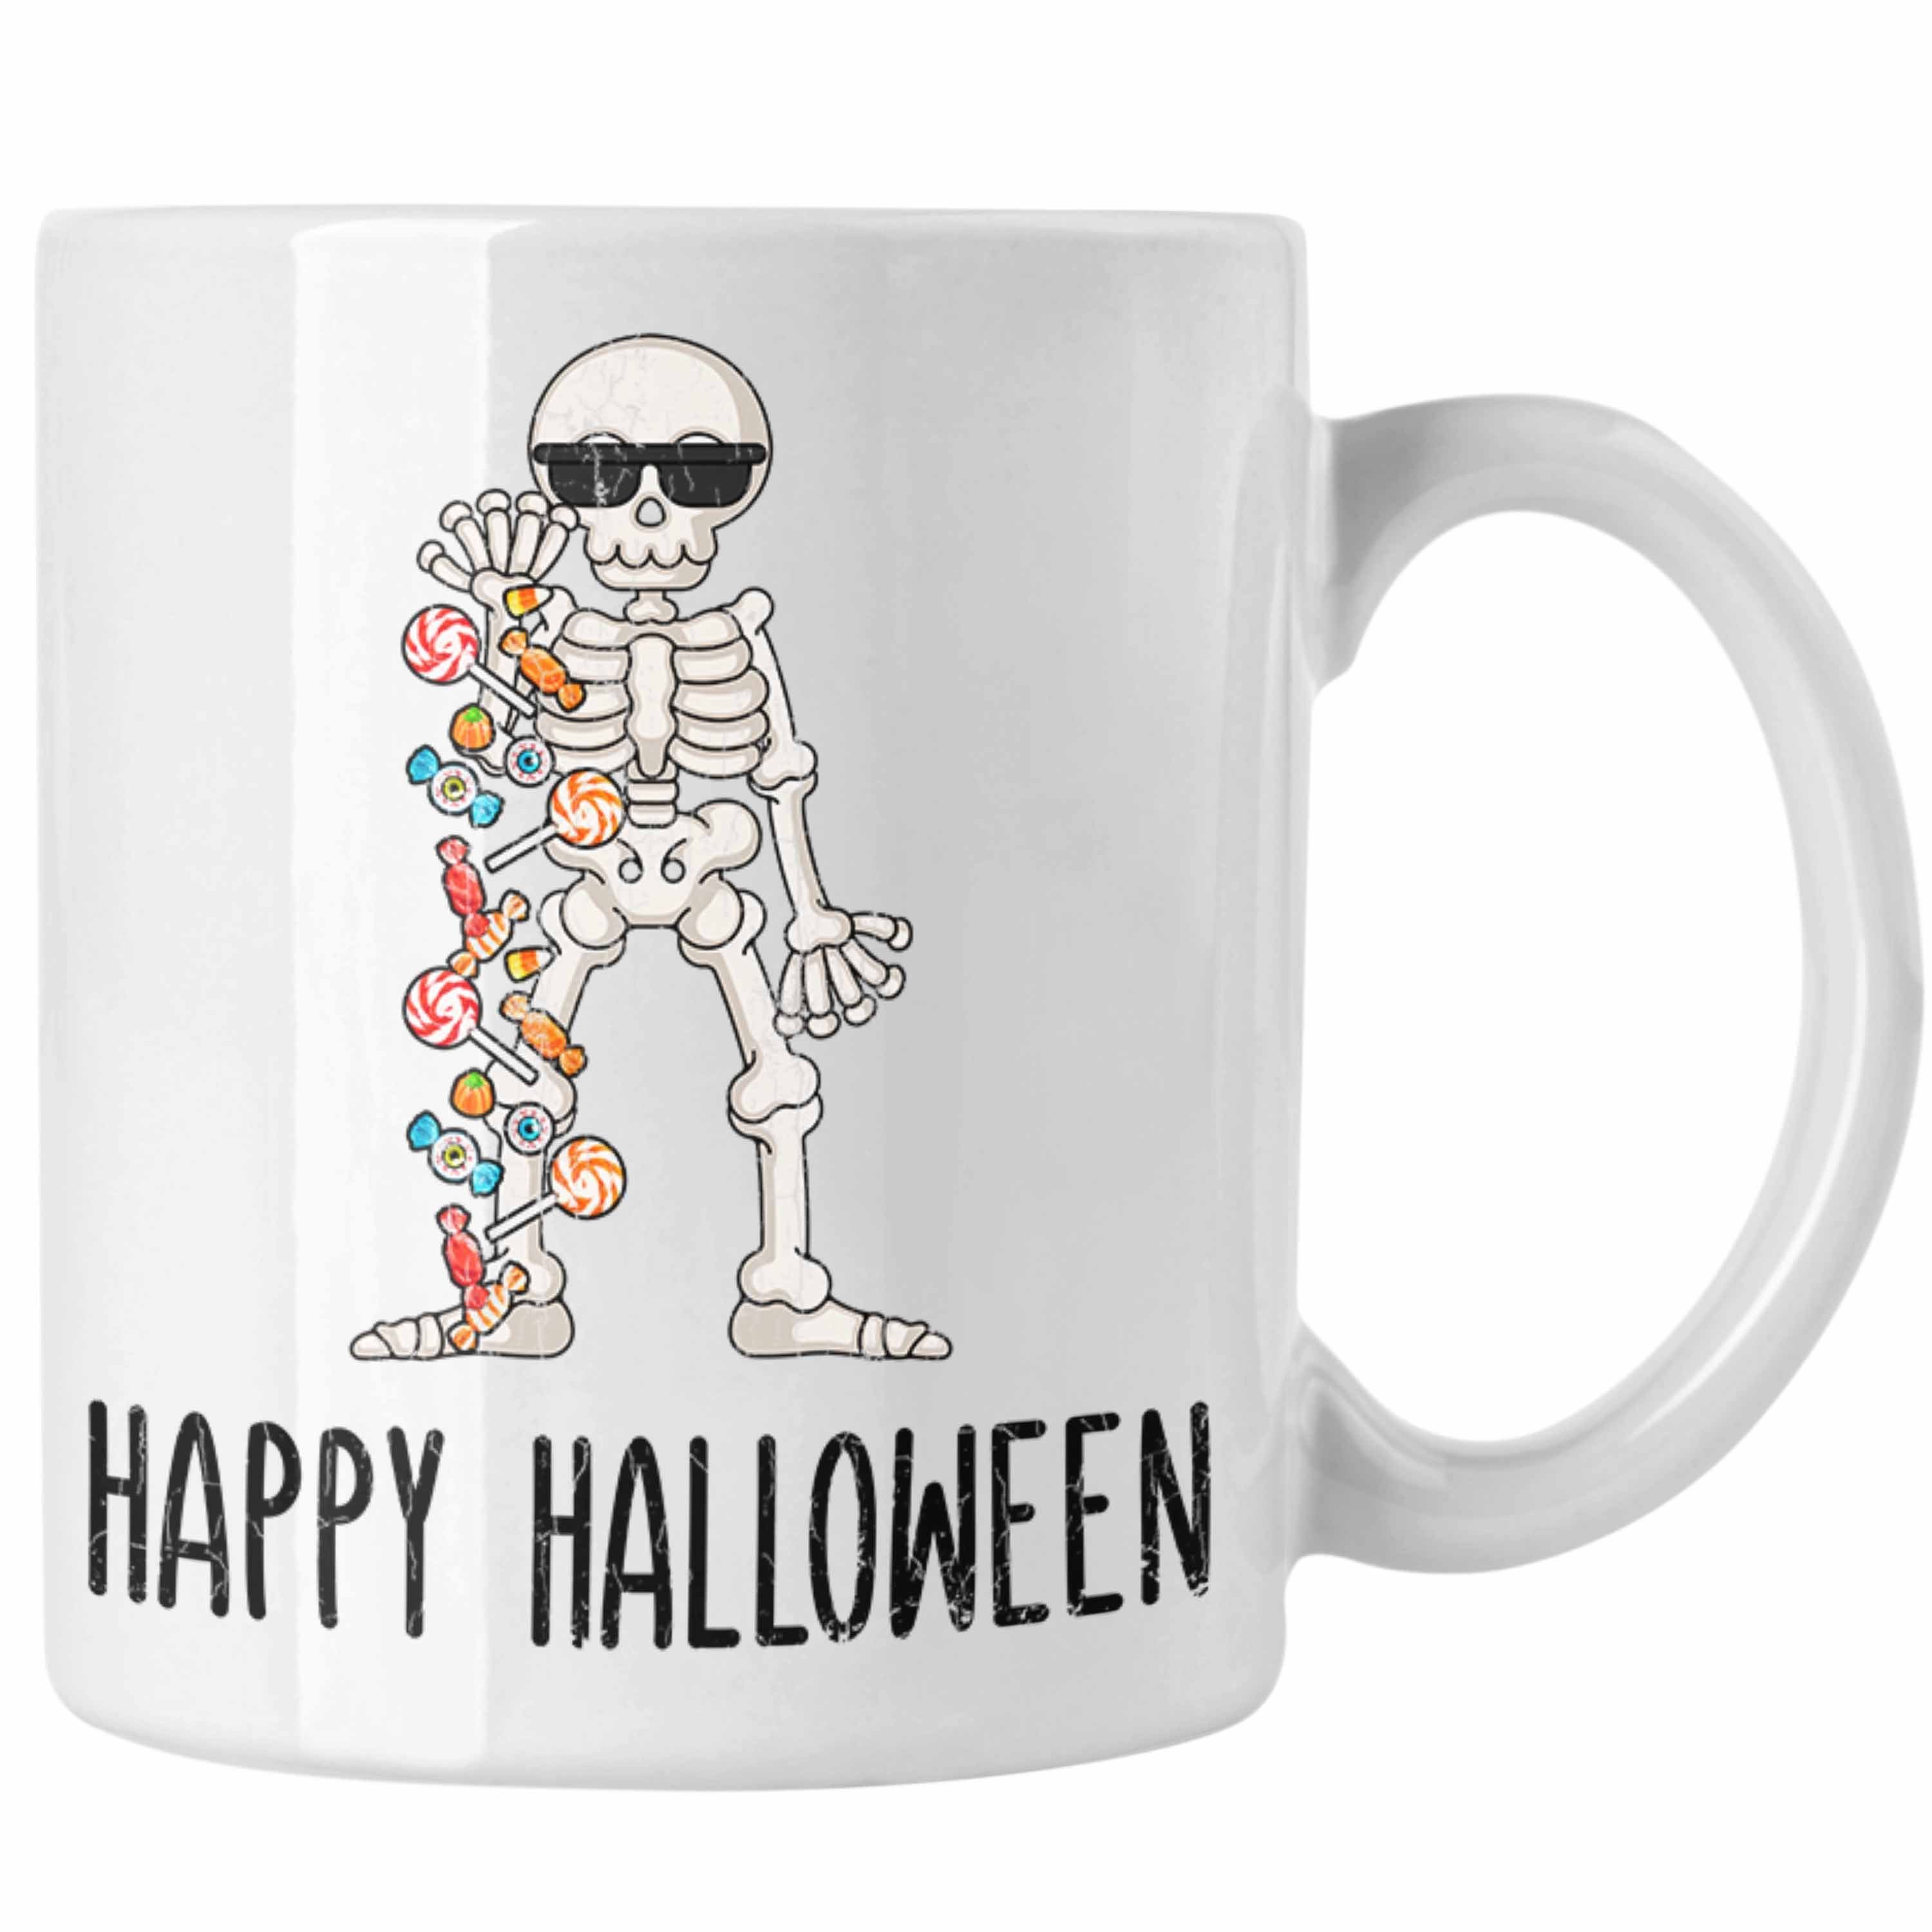 Trendation Tasse Halloween Tasse Kürbis Dekoration Becher Happy Halloween Skelet Weiss